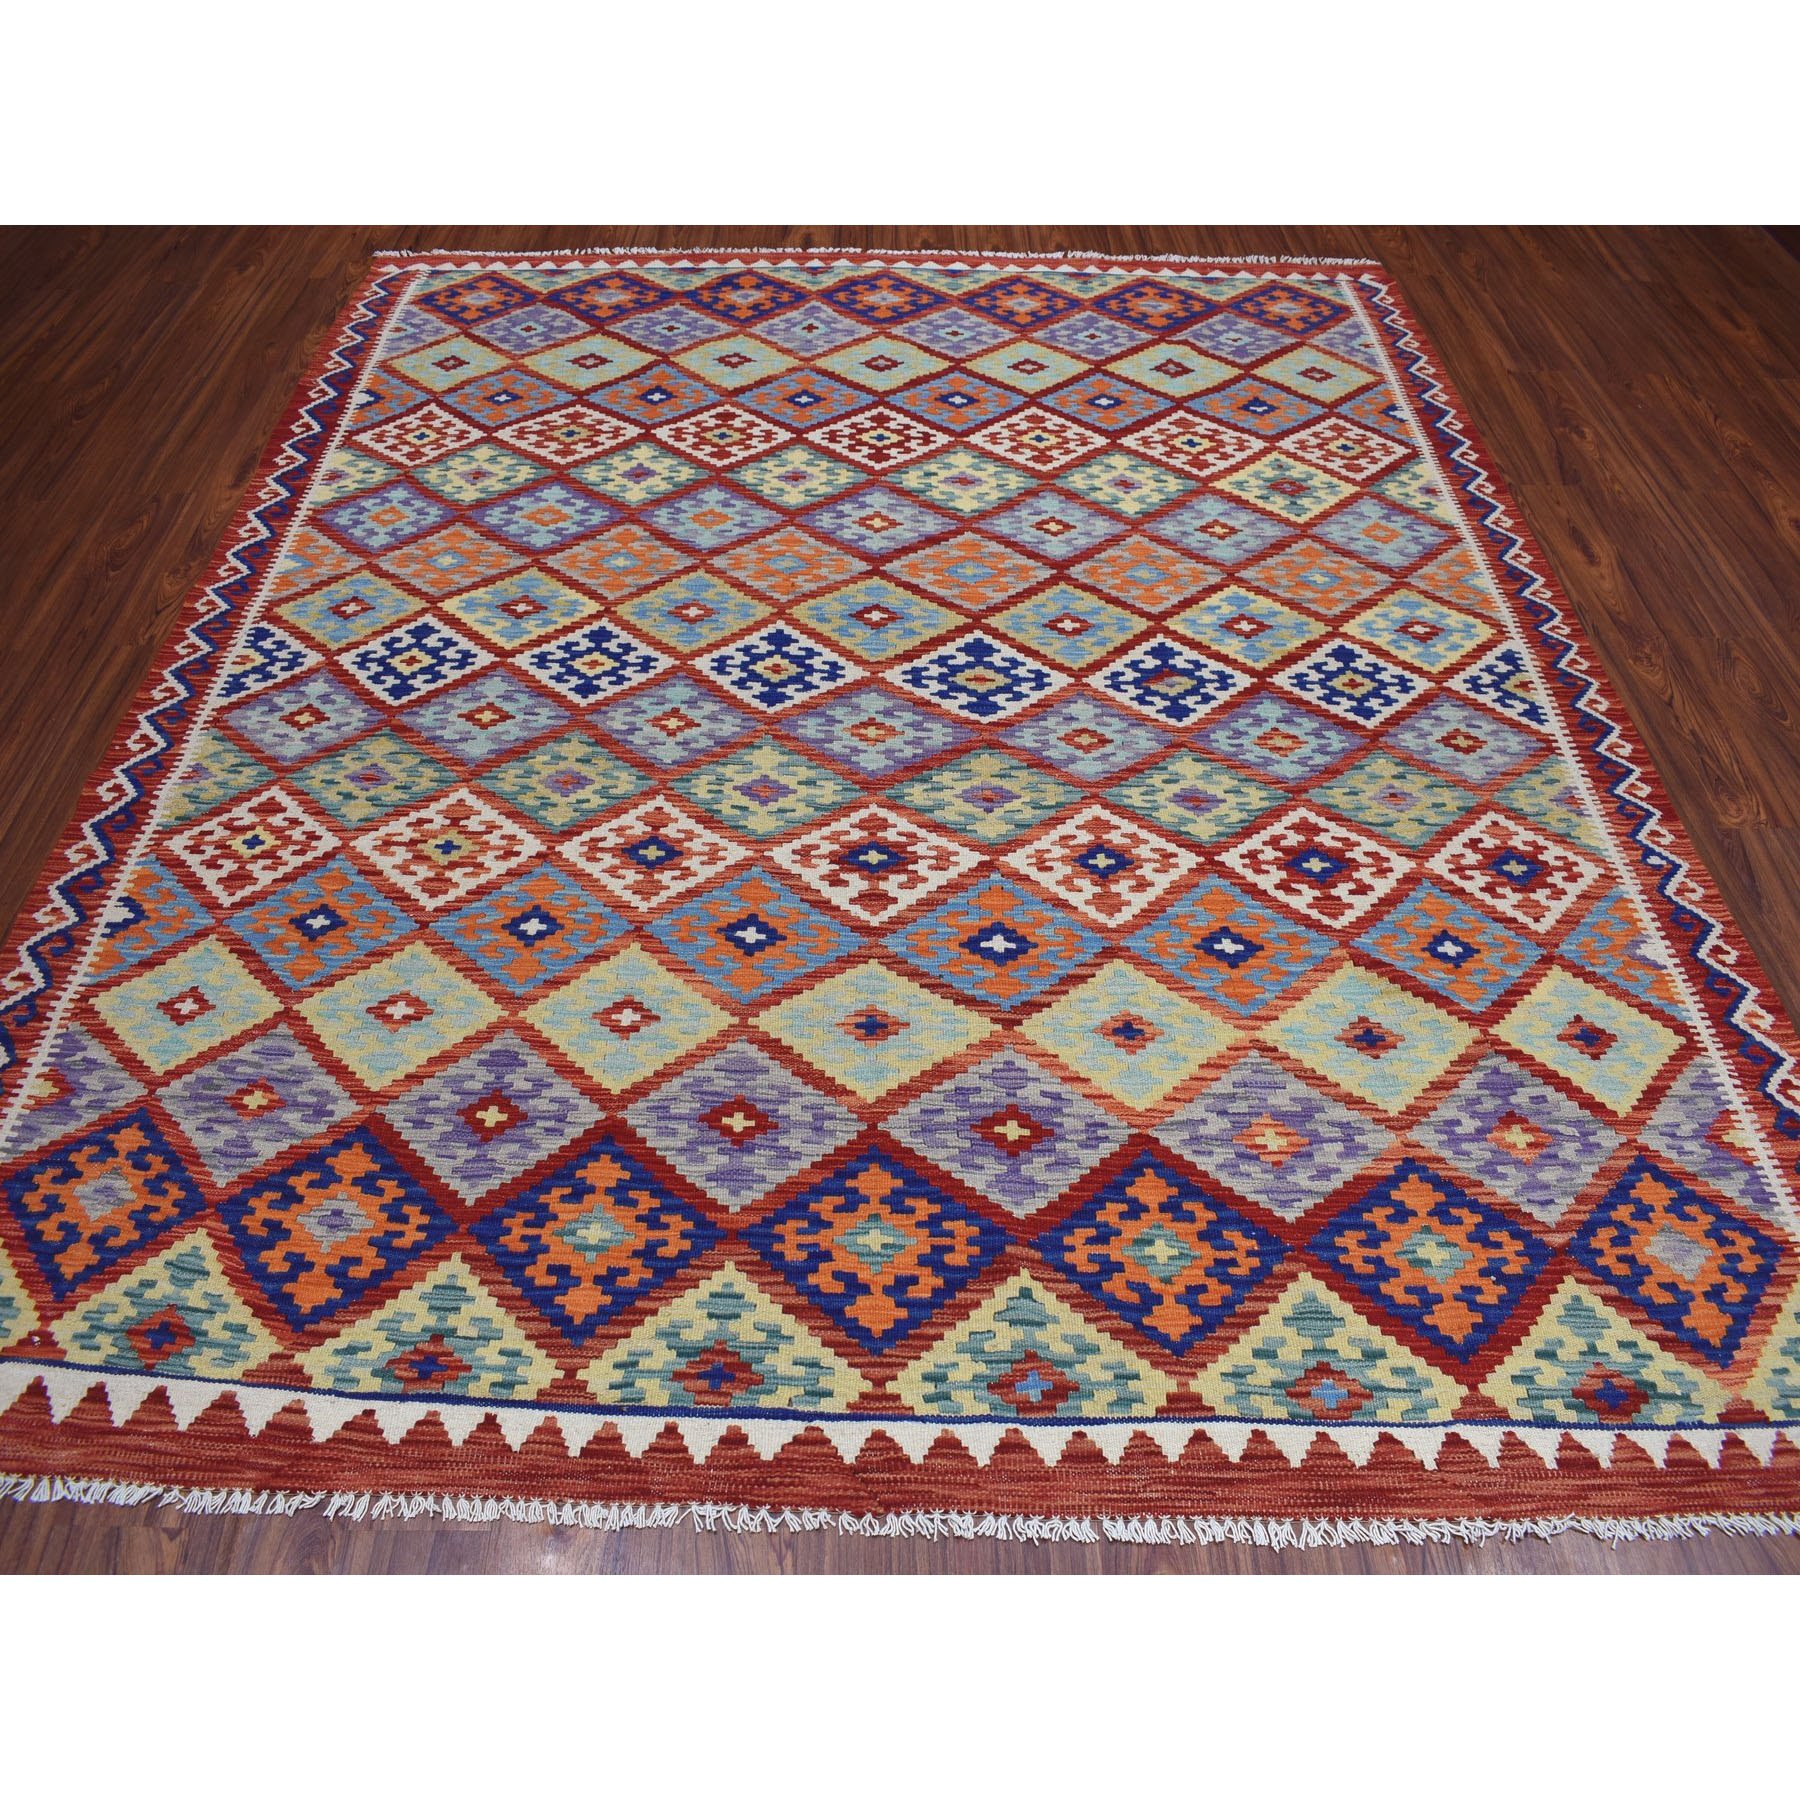 8-1 x9-2  Colorful Afghan Kilim Pure Wool Hand Woven Oriental Rug 